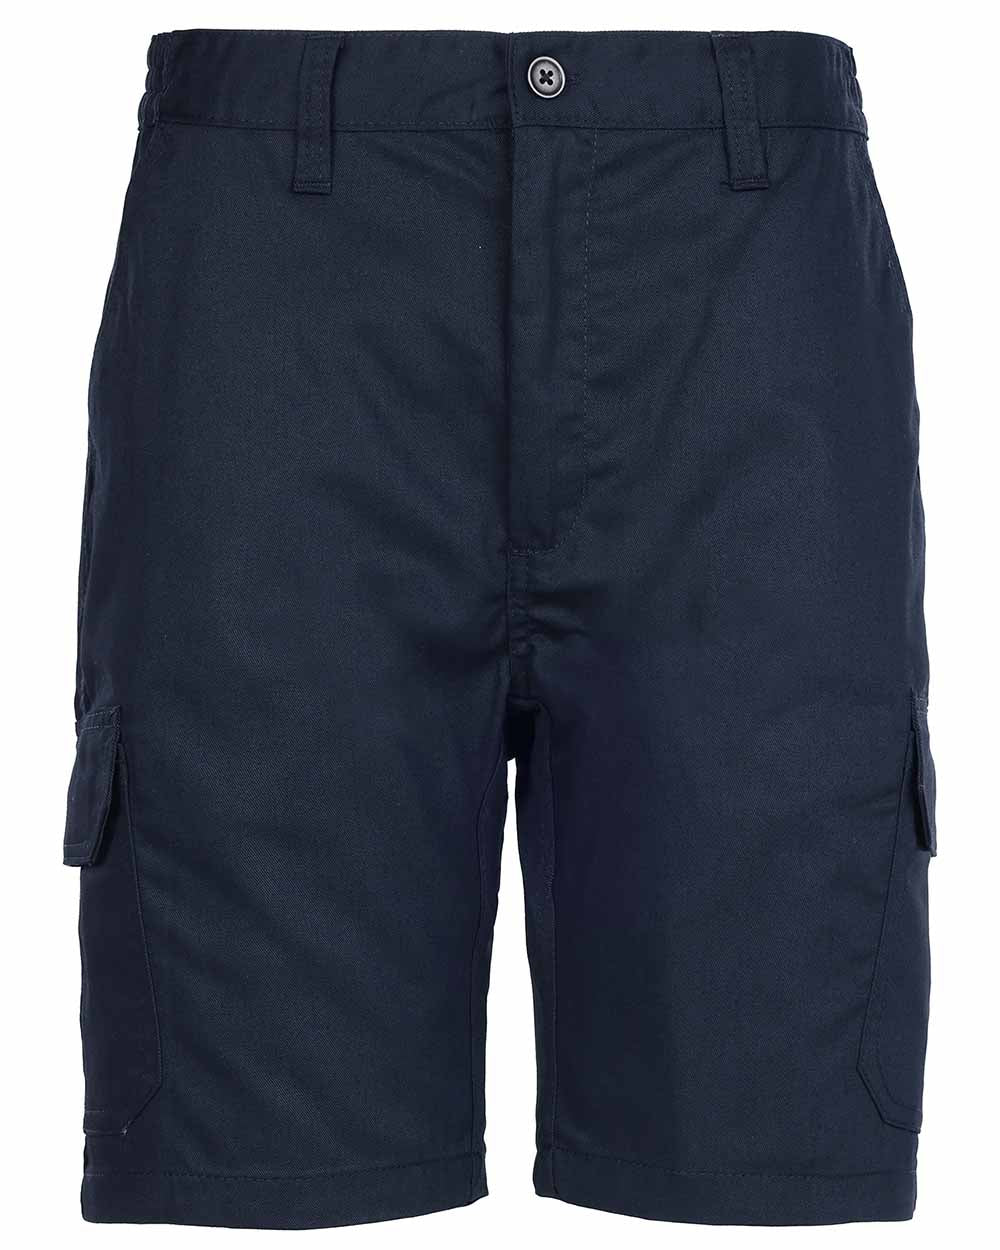 Fort Workforce Shorts in Navy Blue 